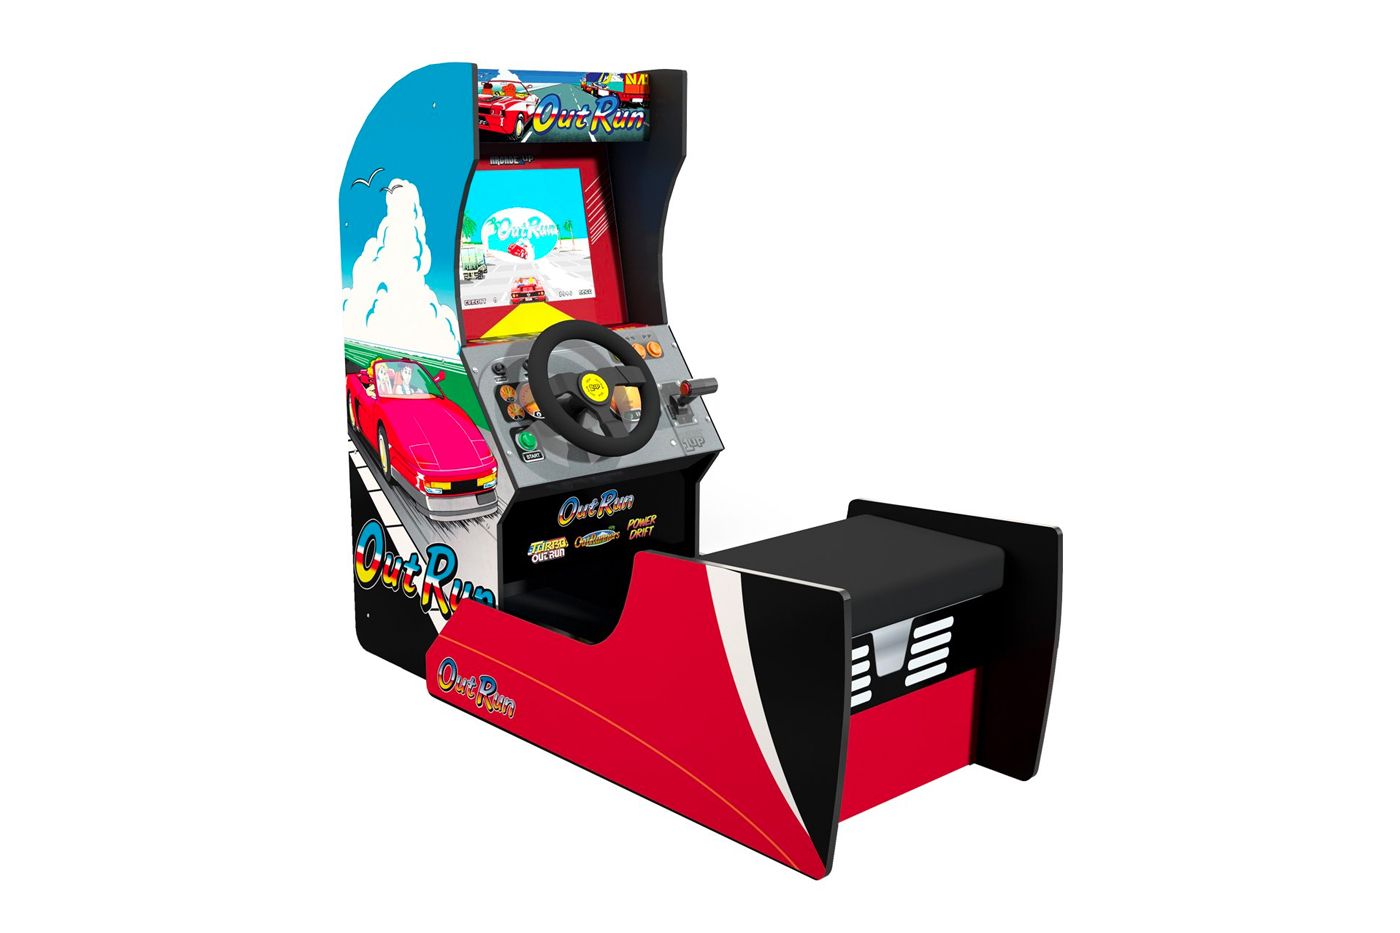 https://hypebeast.com/image/2020/11/outrun-arcade1up-first-driving-cabinet-info-001.jpg